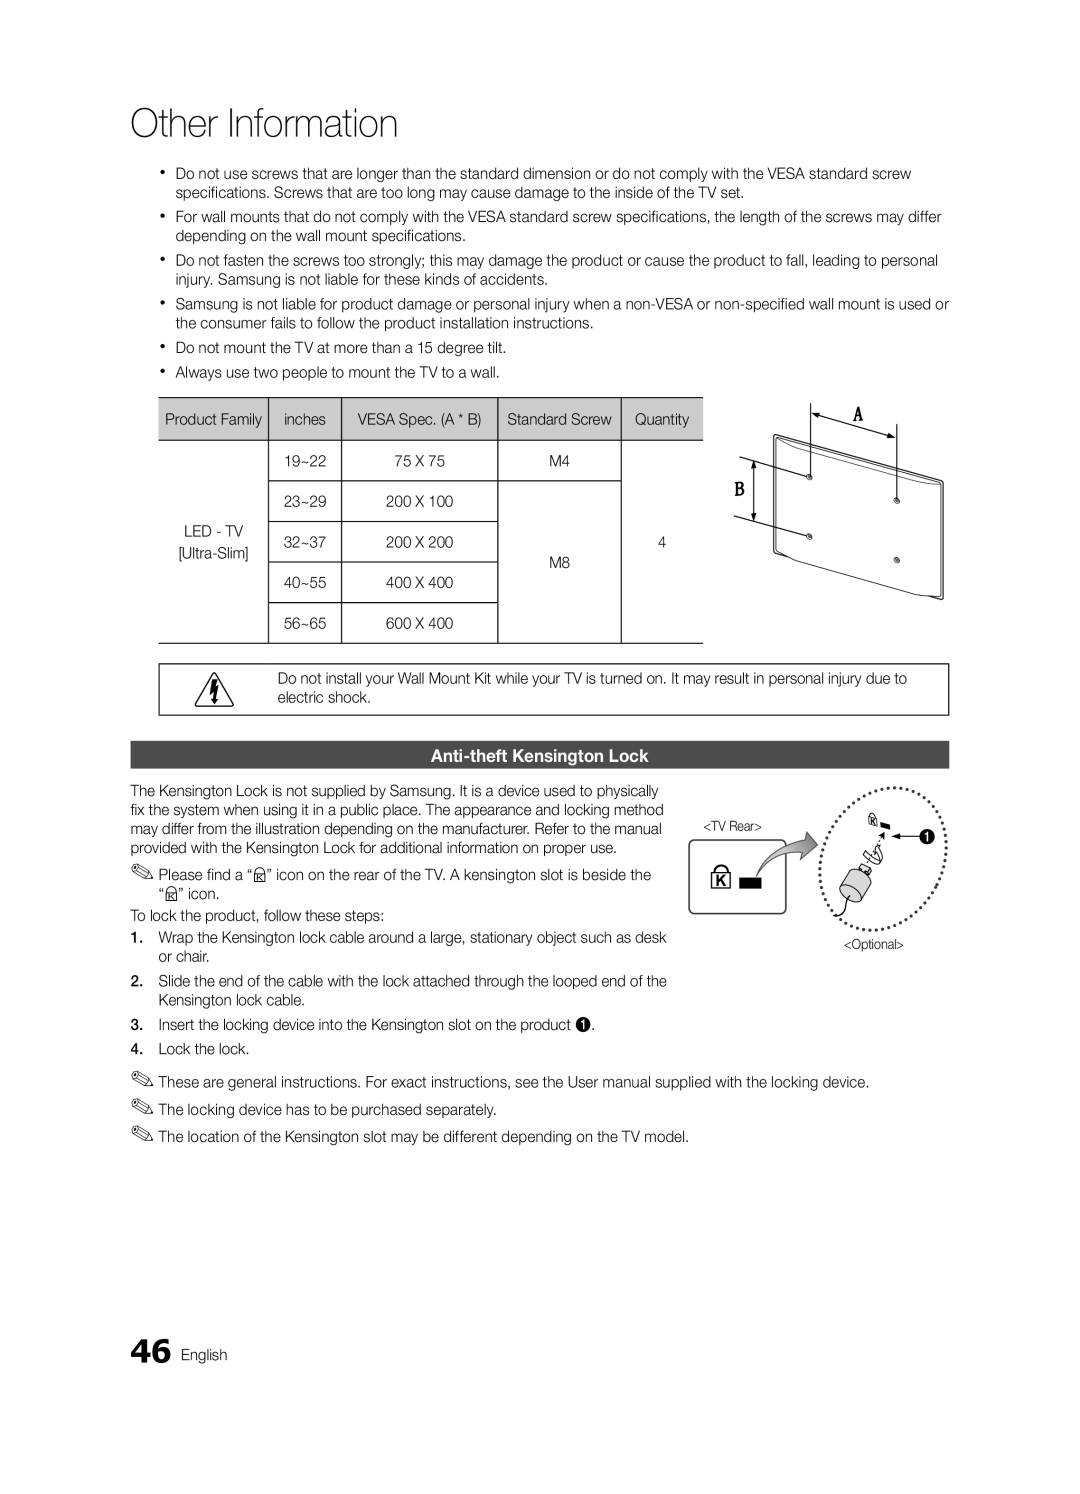 Samsung BN68-03004B-02, UC5000-ZC user manual Anti-theft Kensington Lock, Other Information 